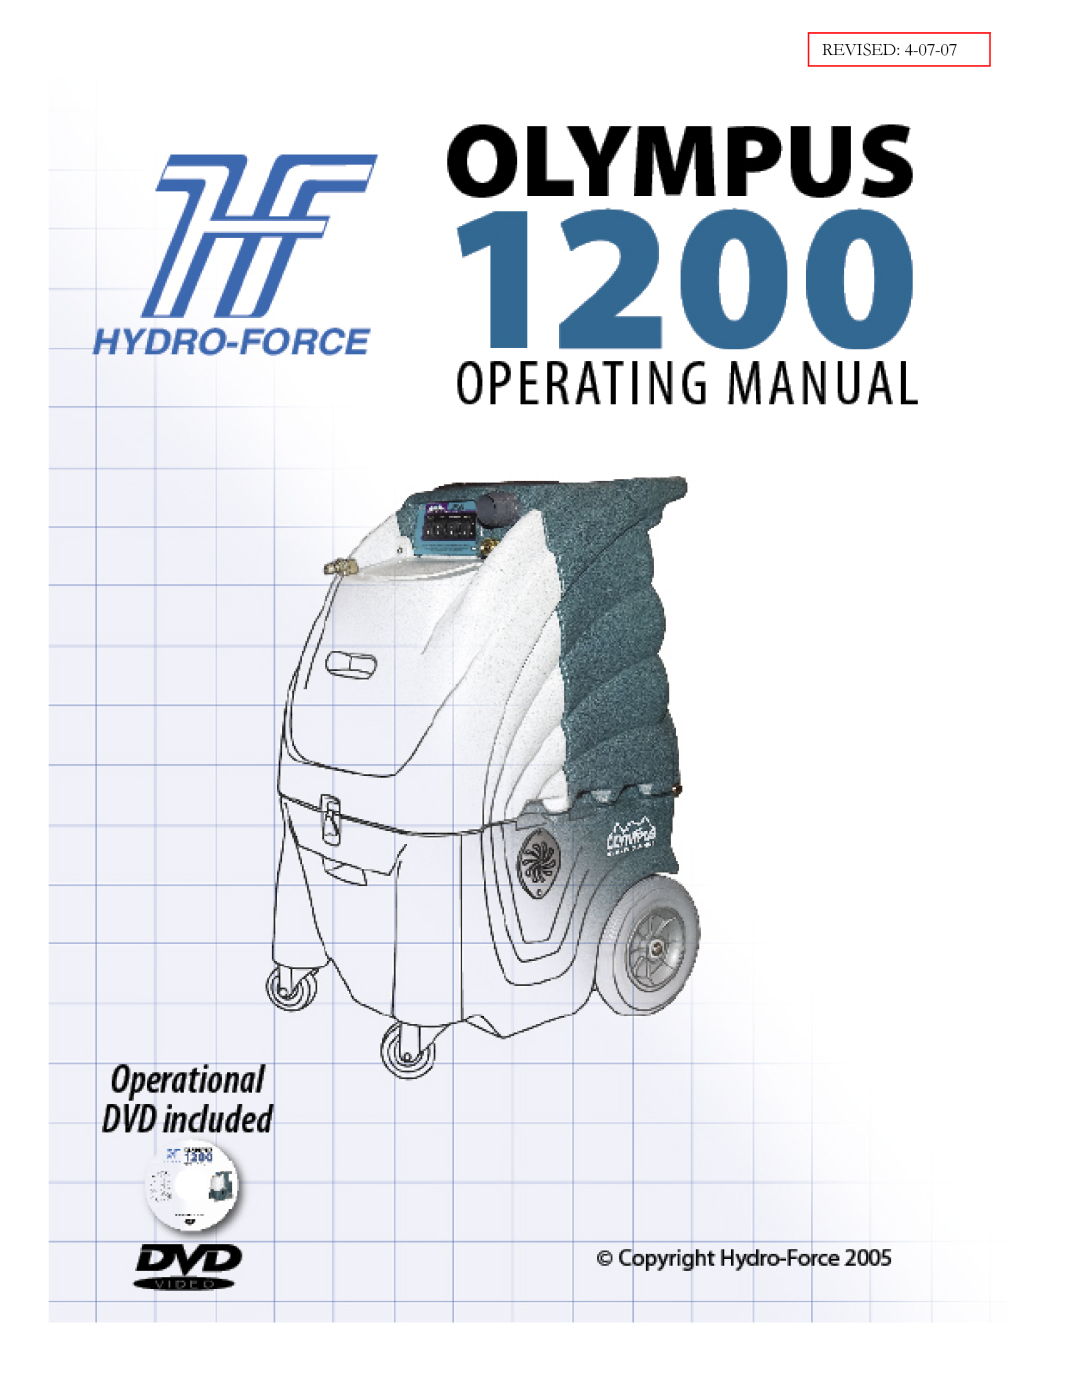 Olympus M1200 manual Revised 